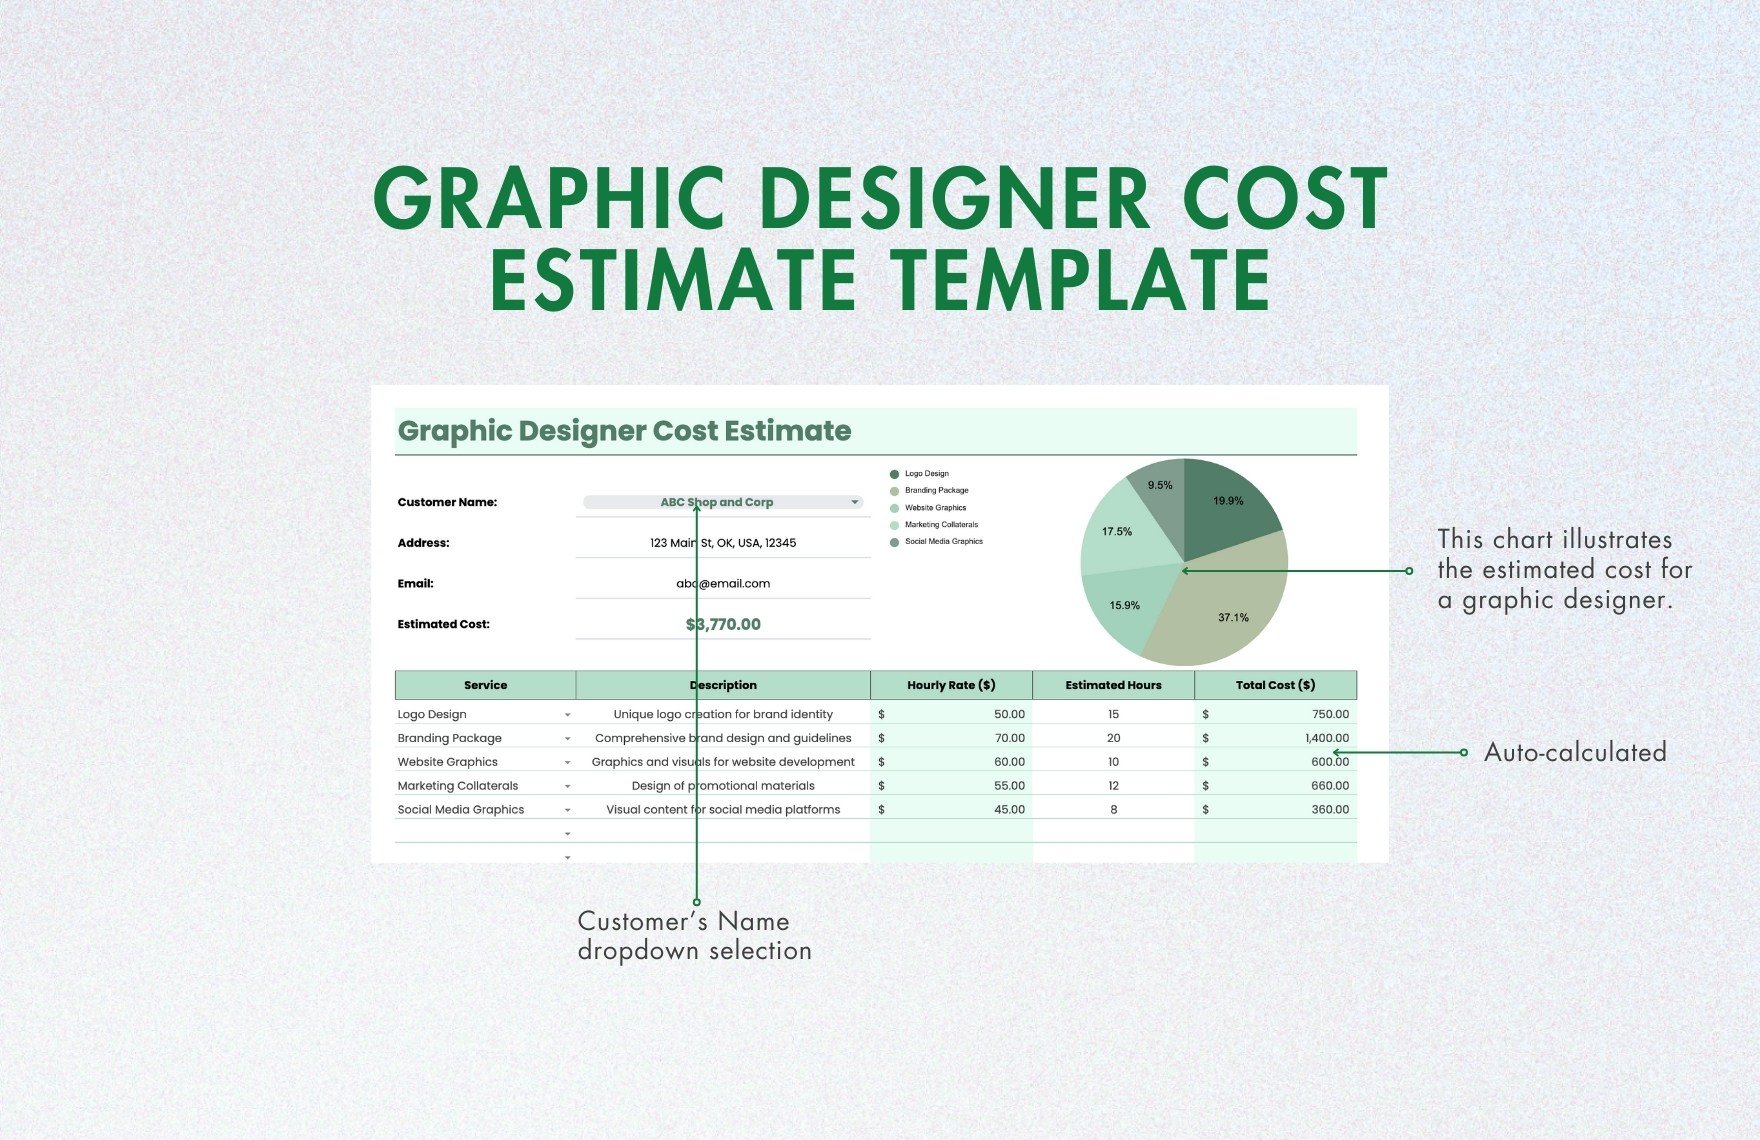 Graphic Designer Cost Estimate Template